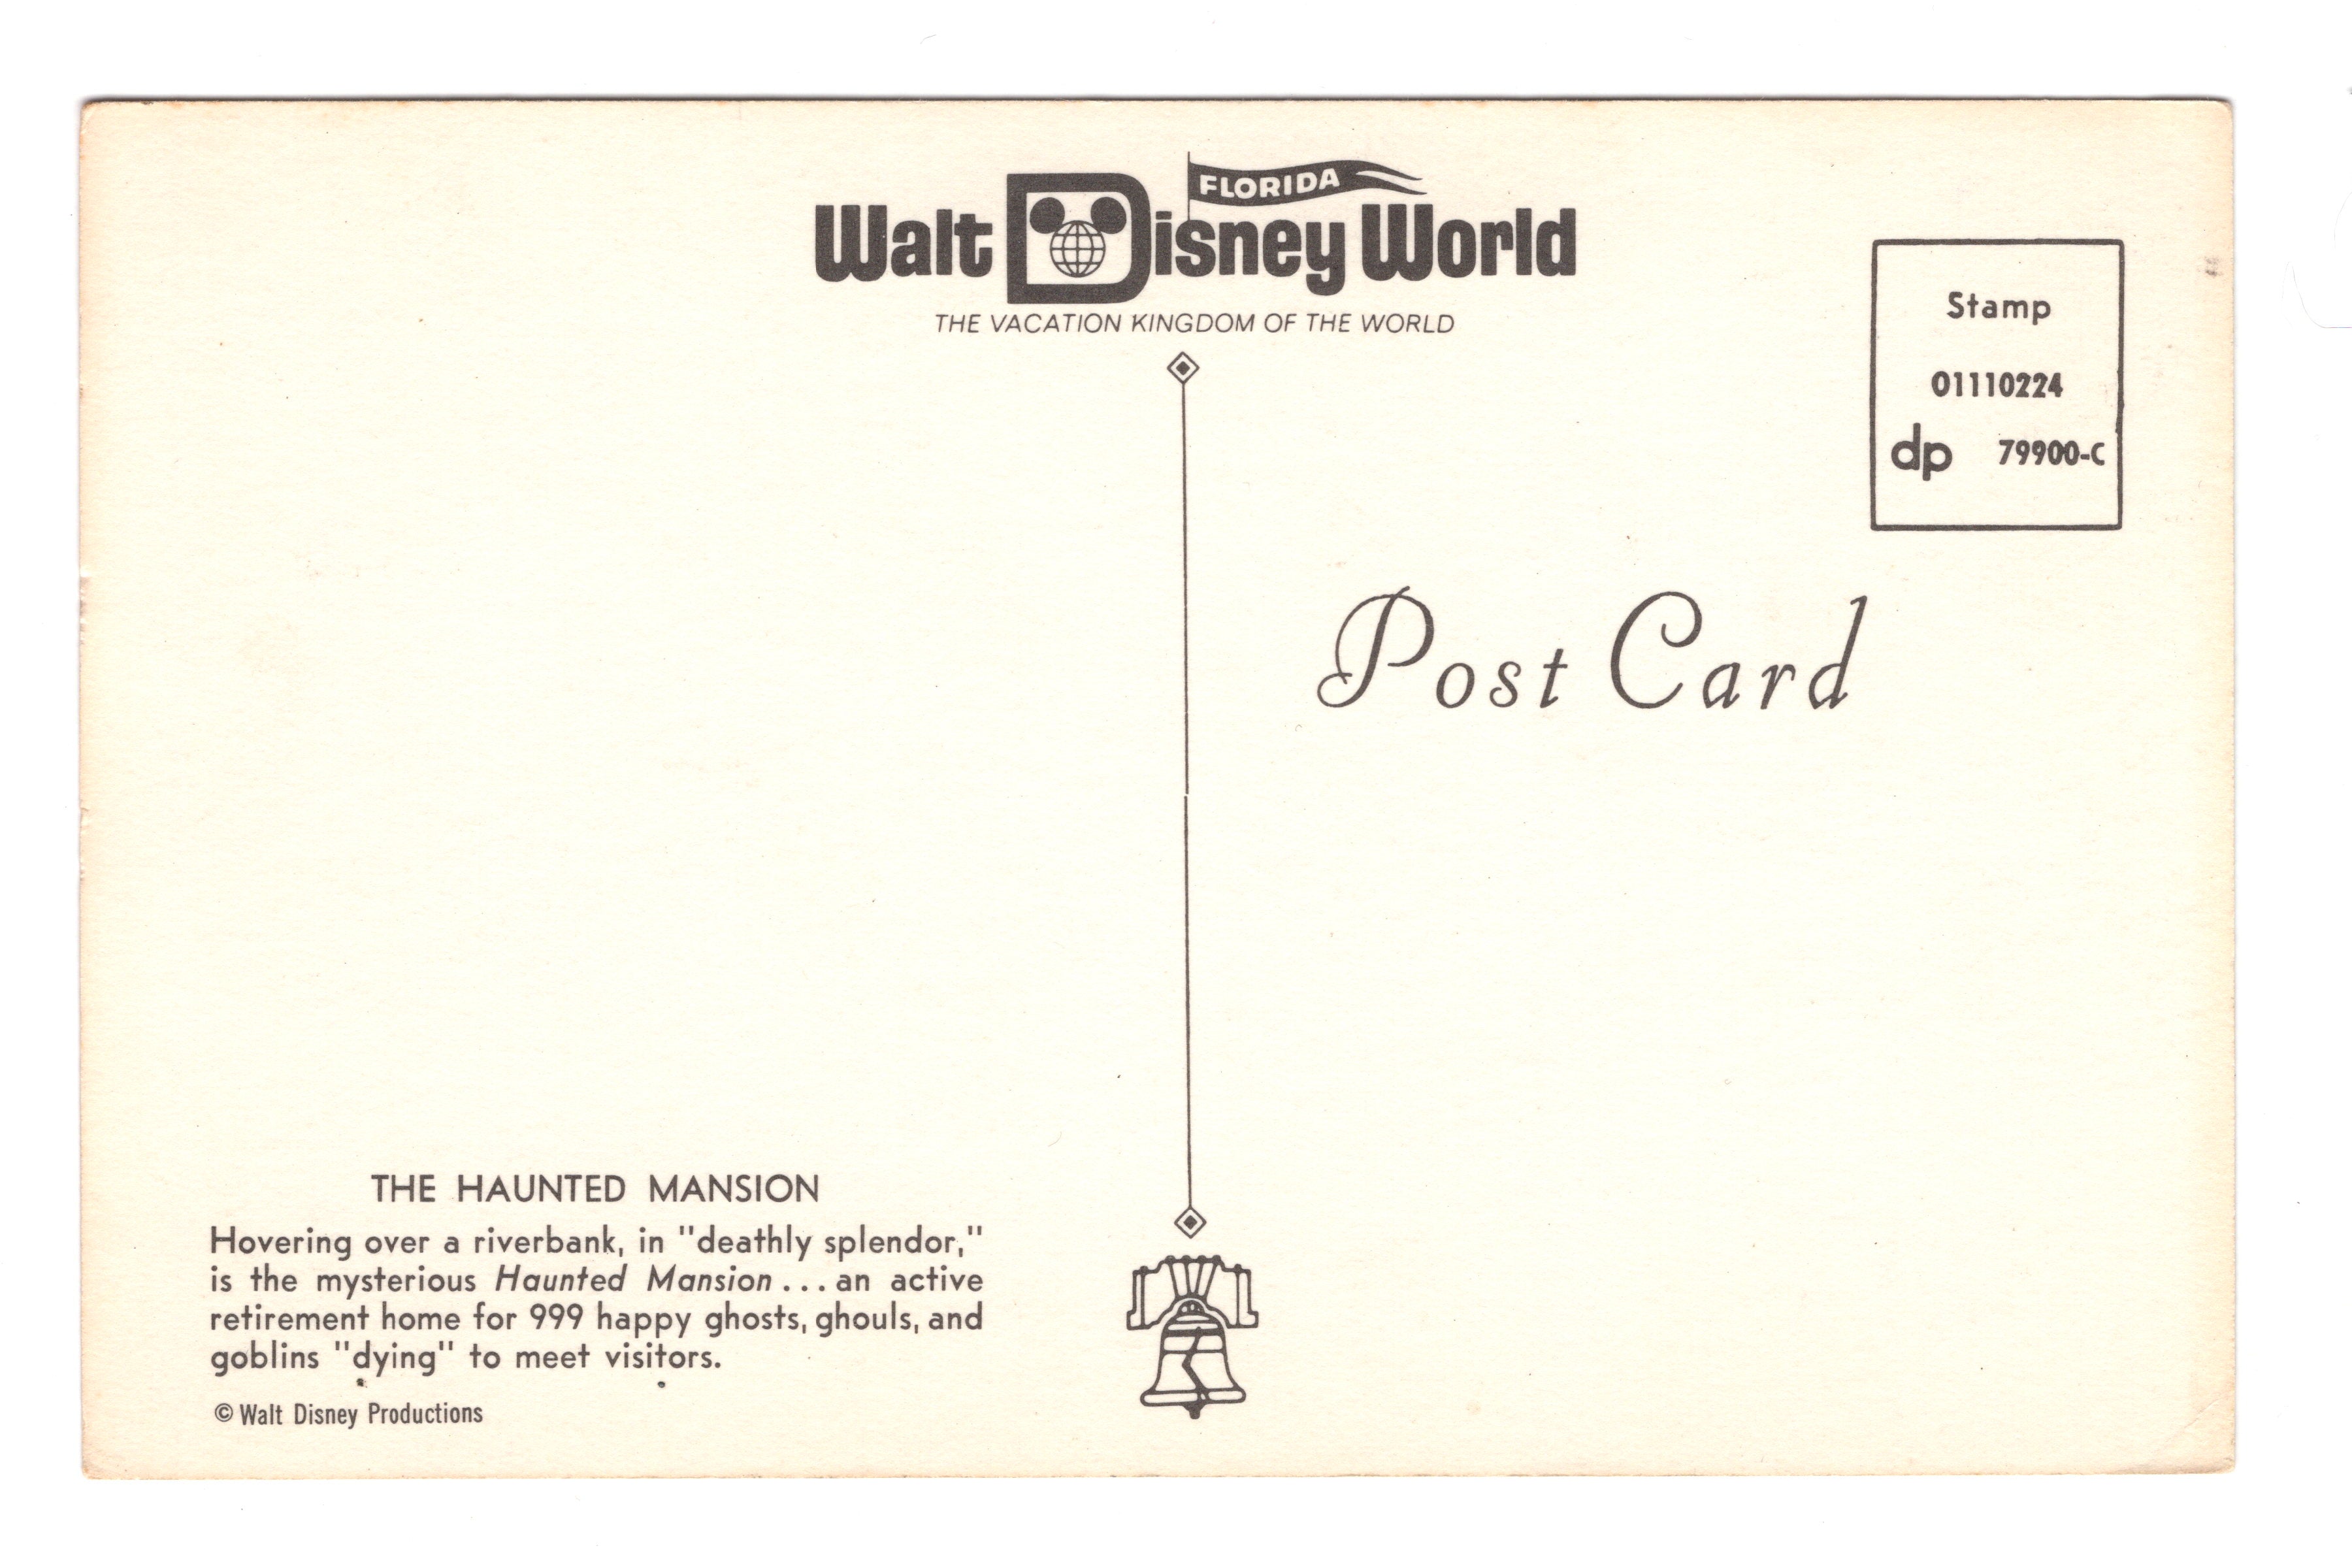 The Haunted Mansion at Walt Disney World, Florida, Vintage Post Card.